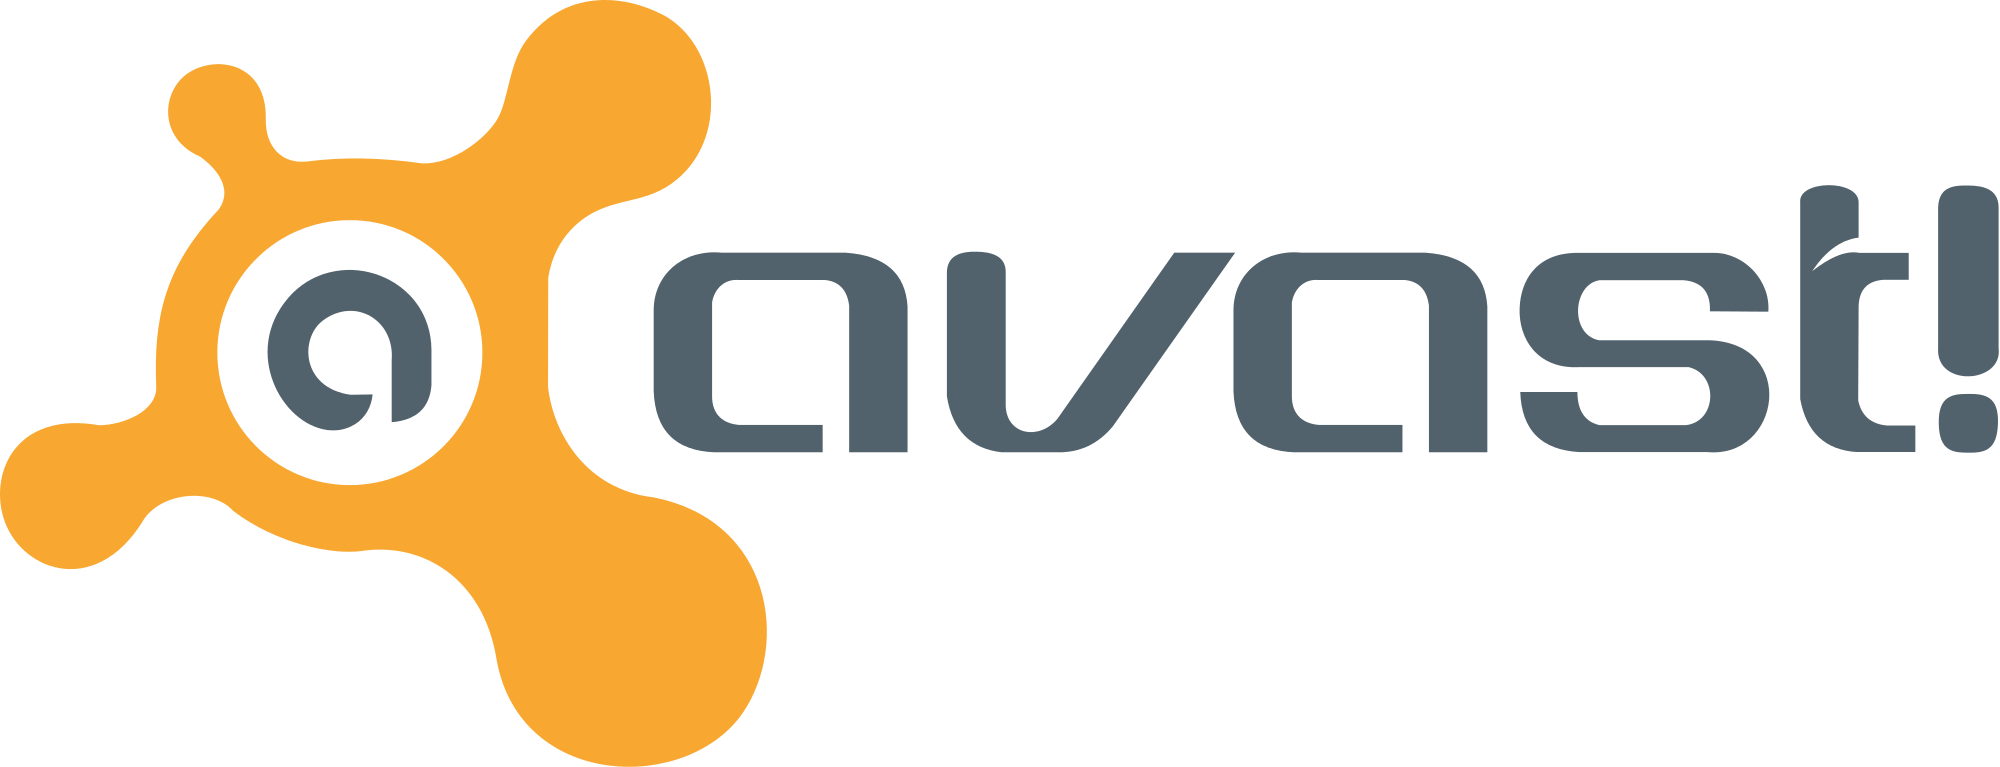 Avast Customer Service - Avast Logo (2000x767)